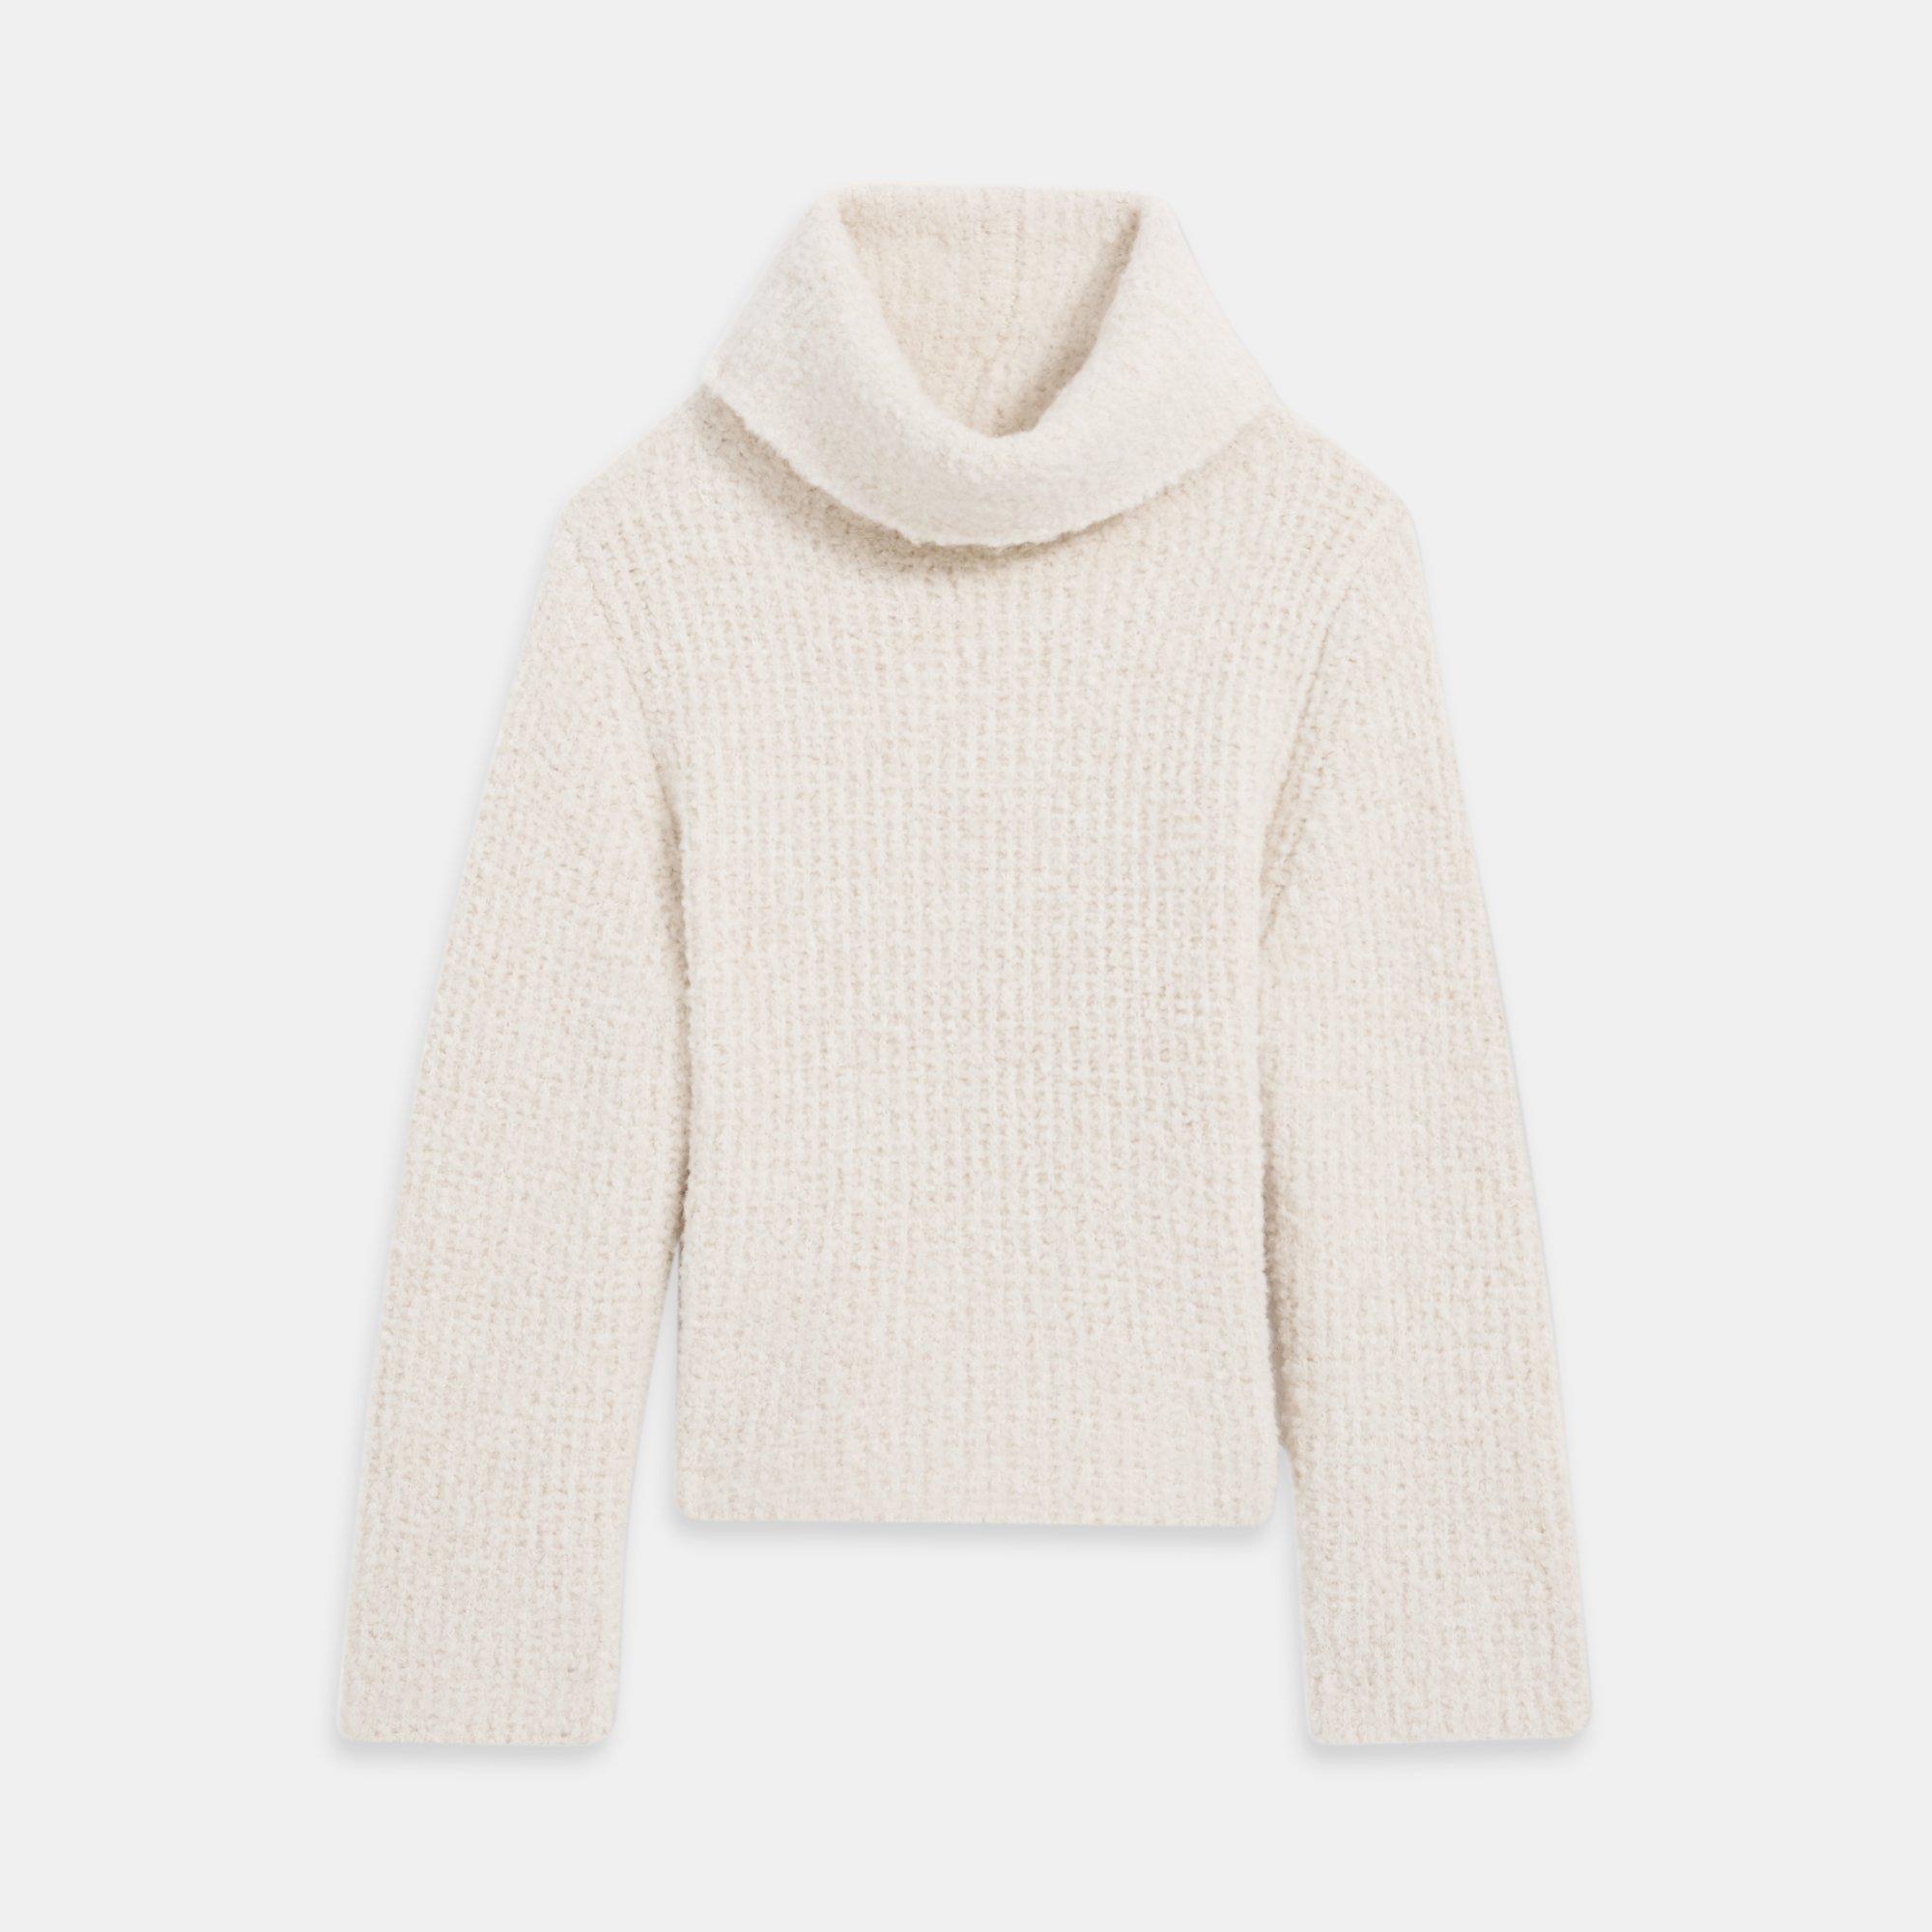 Cowl Neck Sweater in Alpaca Wool Boucle